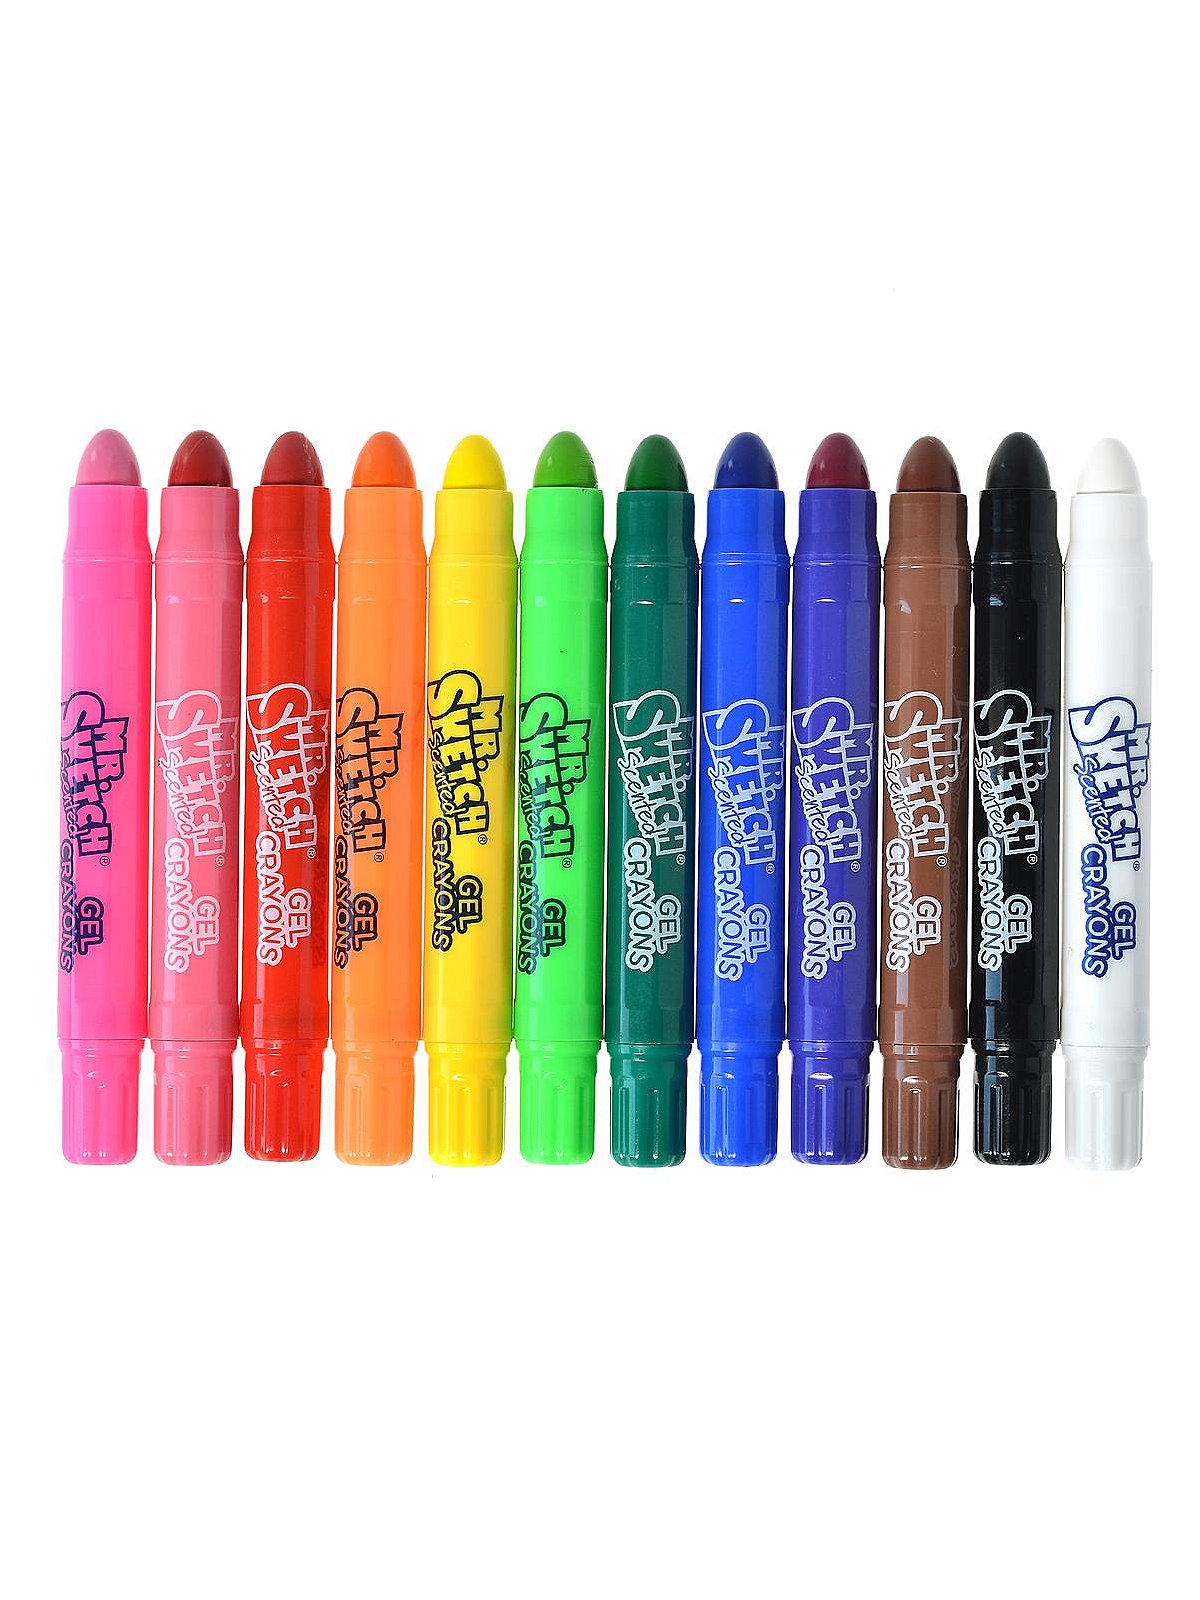 Mr. Sketch Scented Twistable Gel Crayons, Set of 12